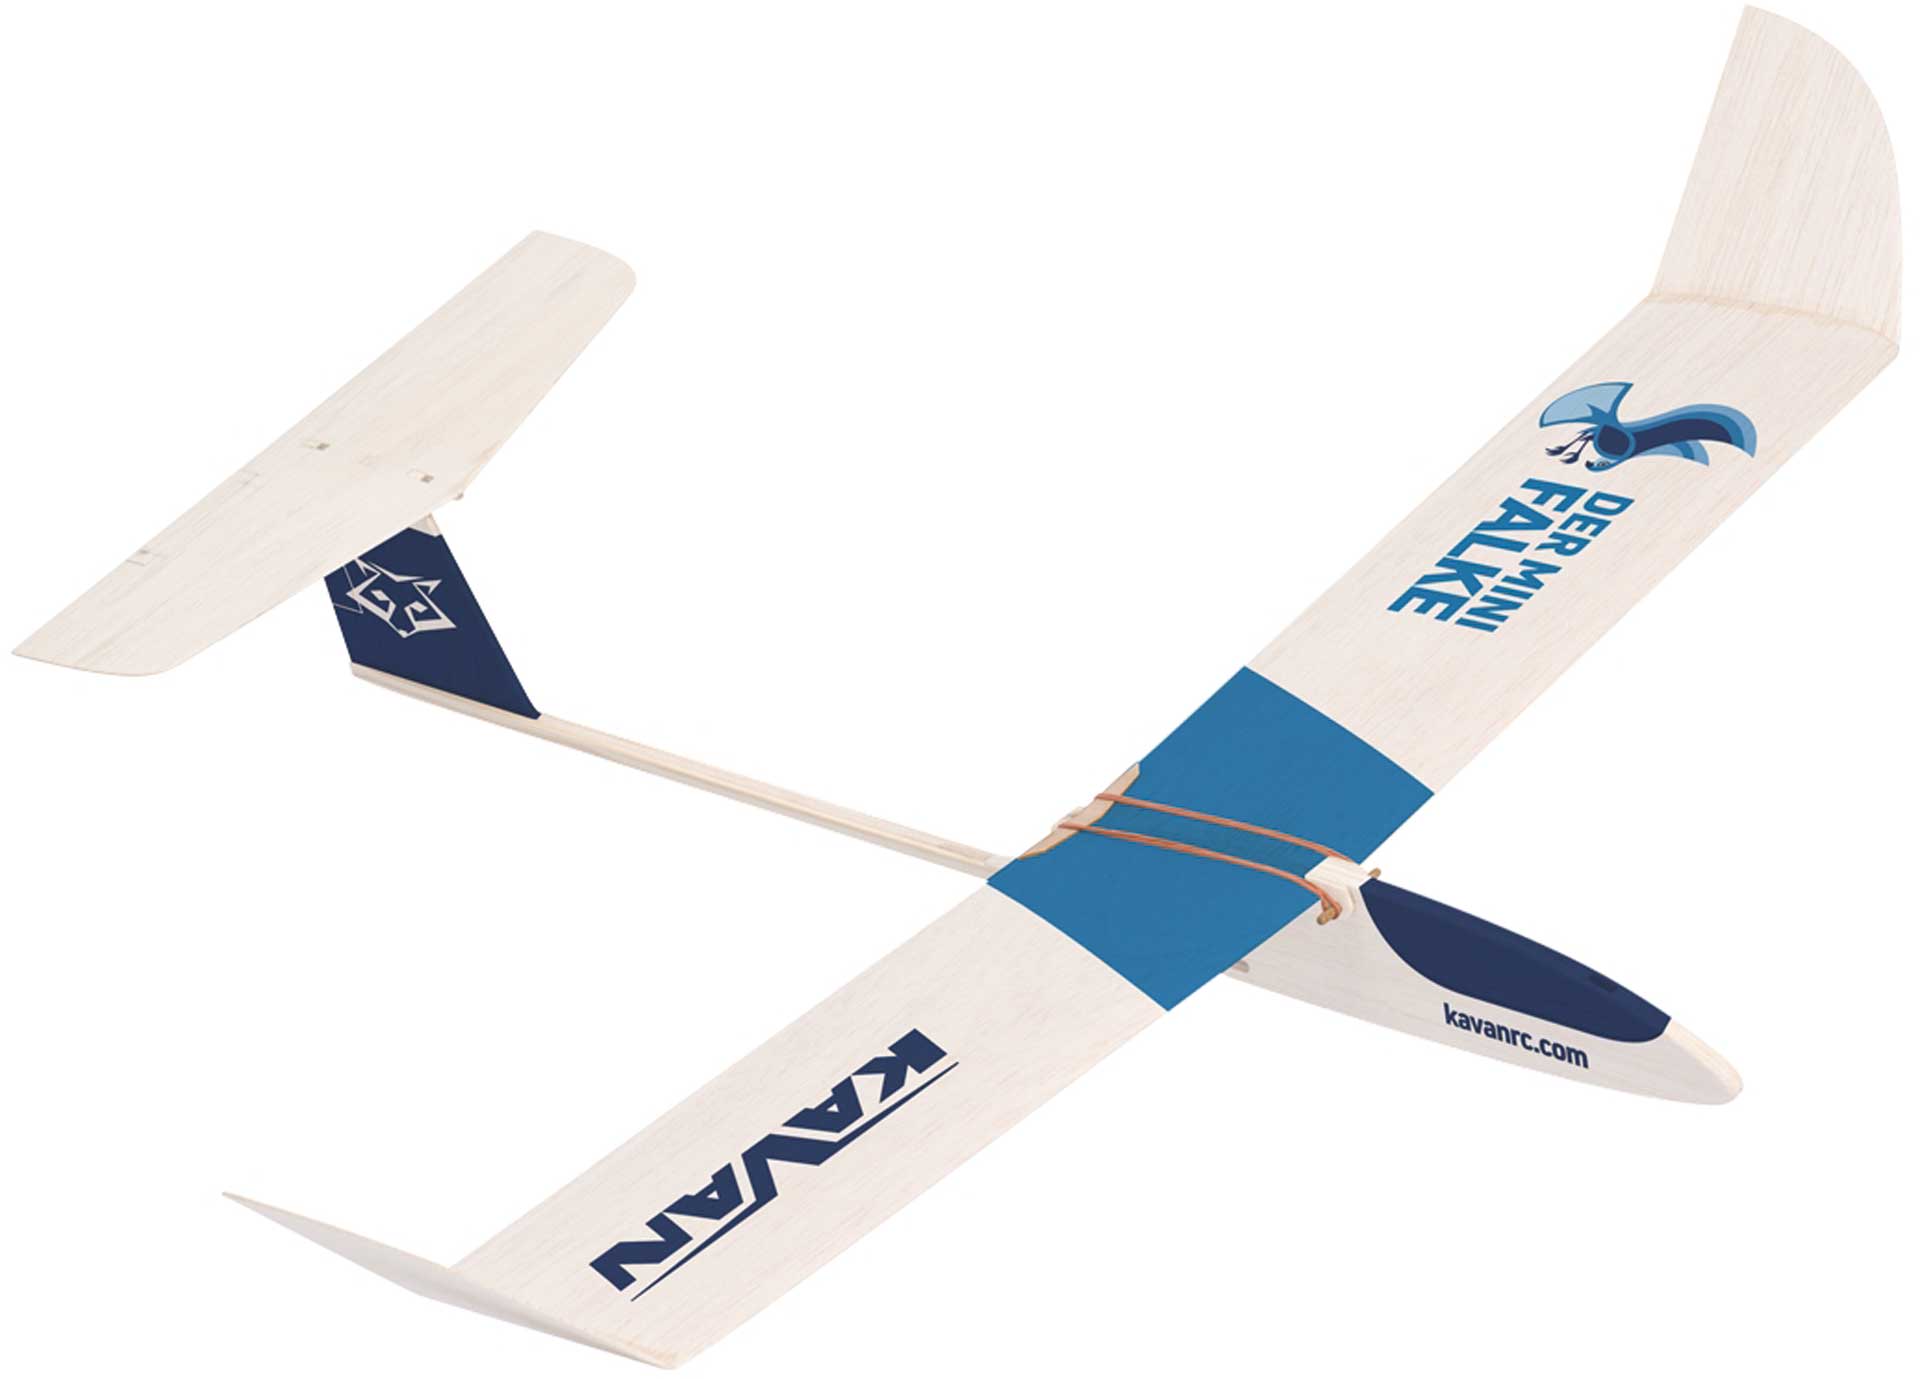 KAVAN Le mini faucon planeur de vol libre 710mm